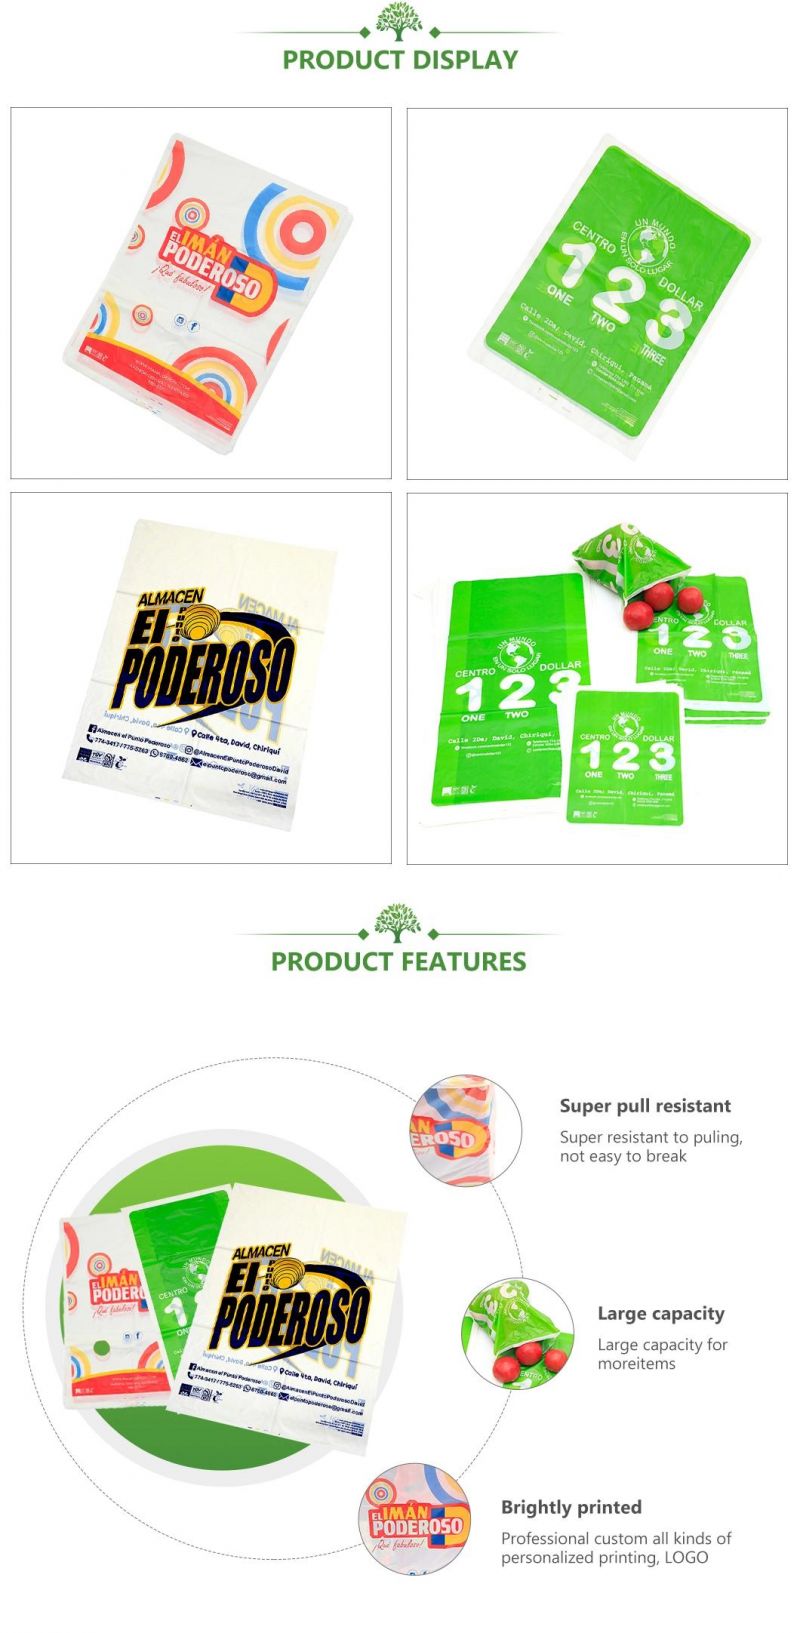 PLA+Pbat/Pbat+Corn Starch Biodegradable Bags, Compostable Bags, Food Bags for Outdoor